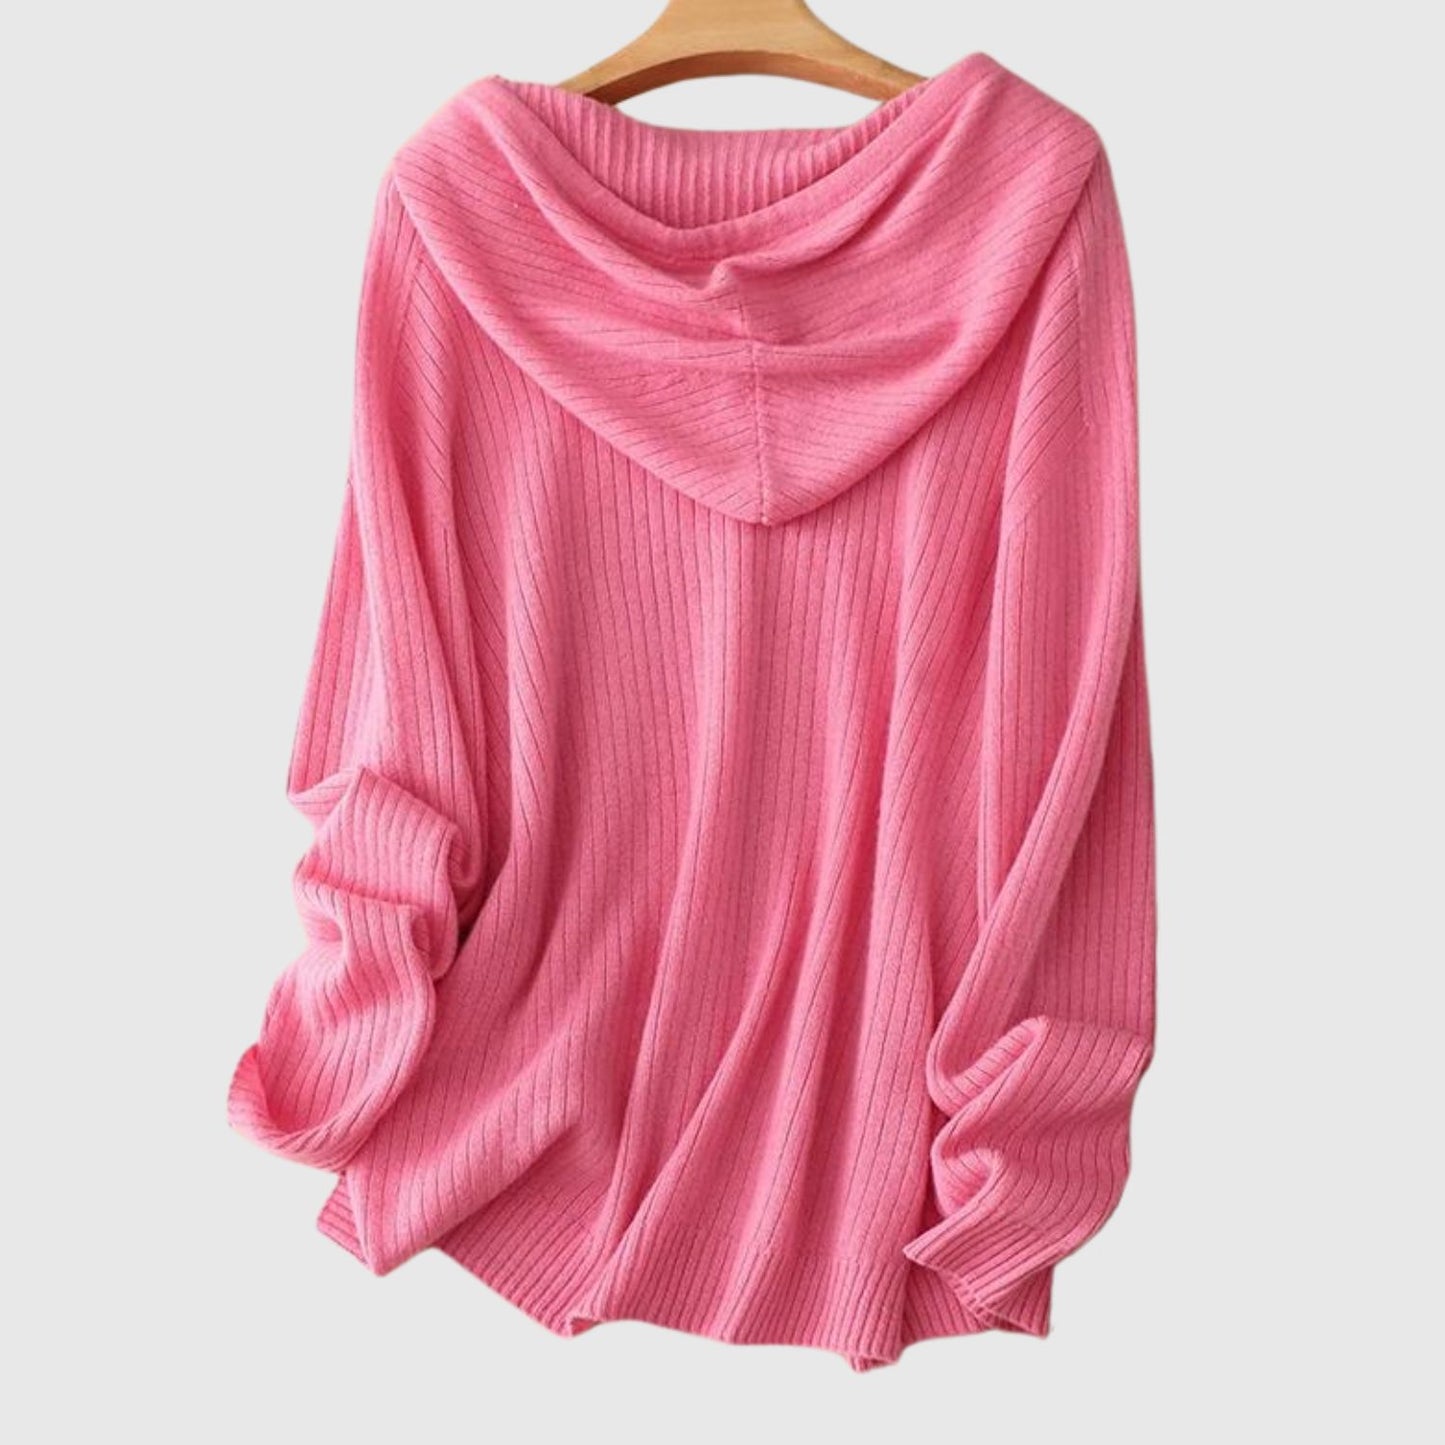 pink merino wool sweater top